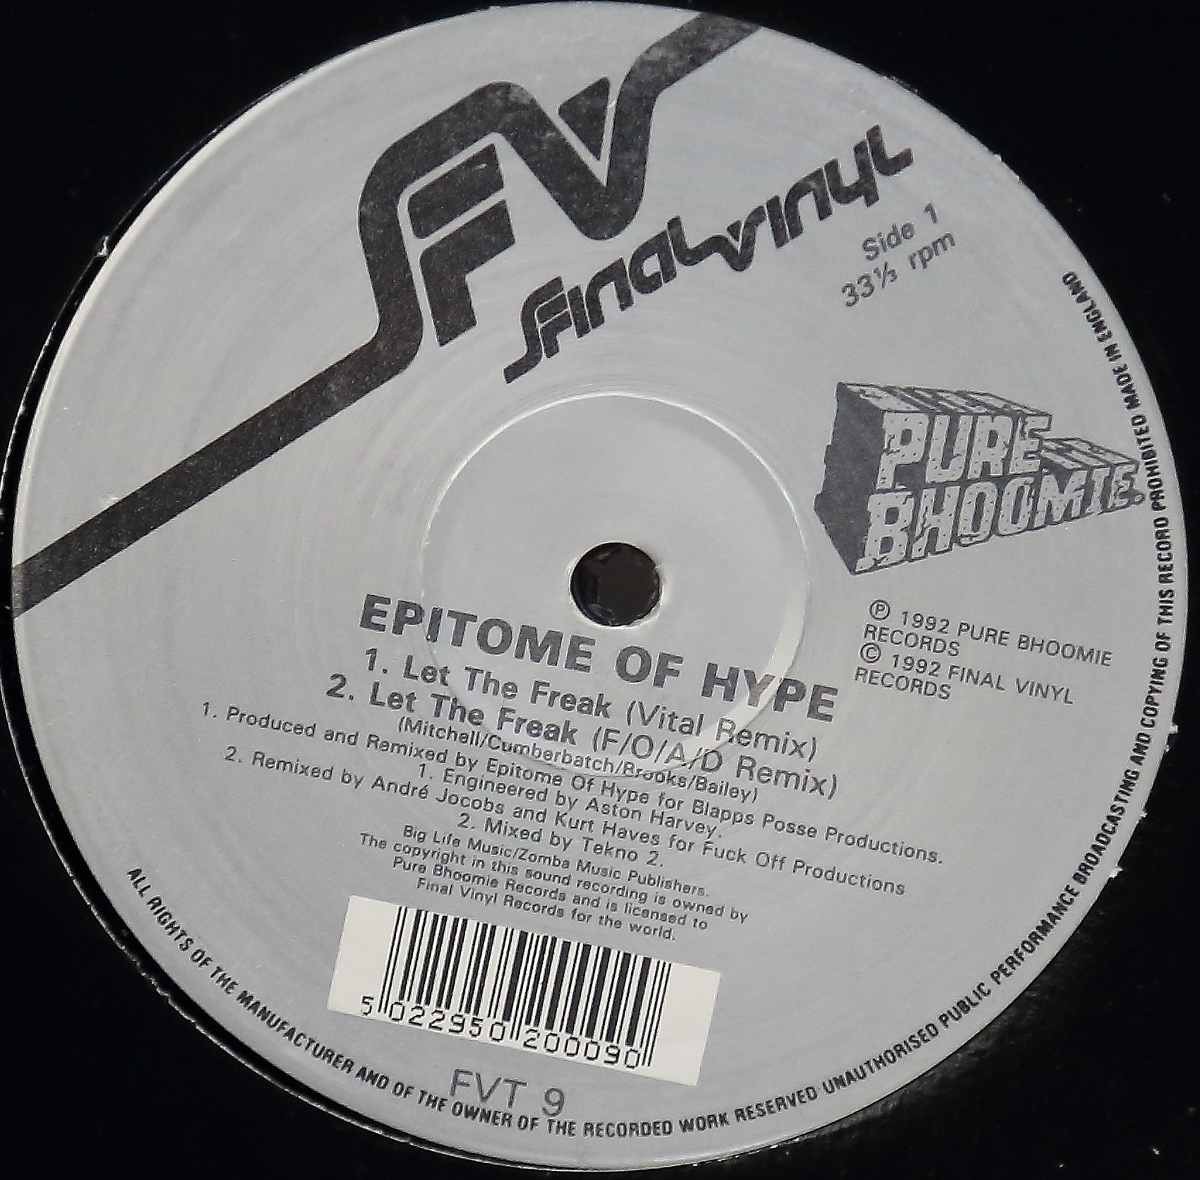 Epitome Of Hype - Let the freak (Original Version / Vital Remix / D Zone Remix / 92 Remake) Old school Blapps Posse Production.